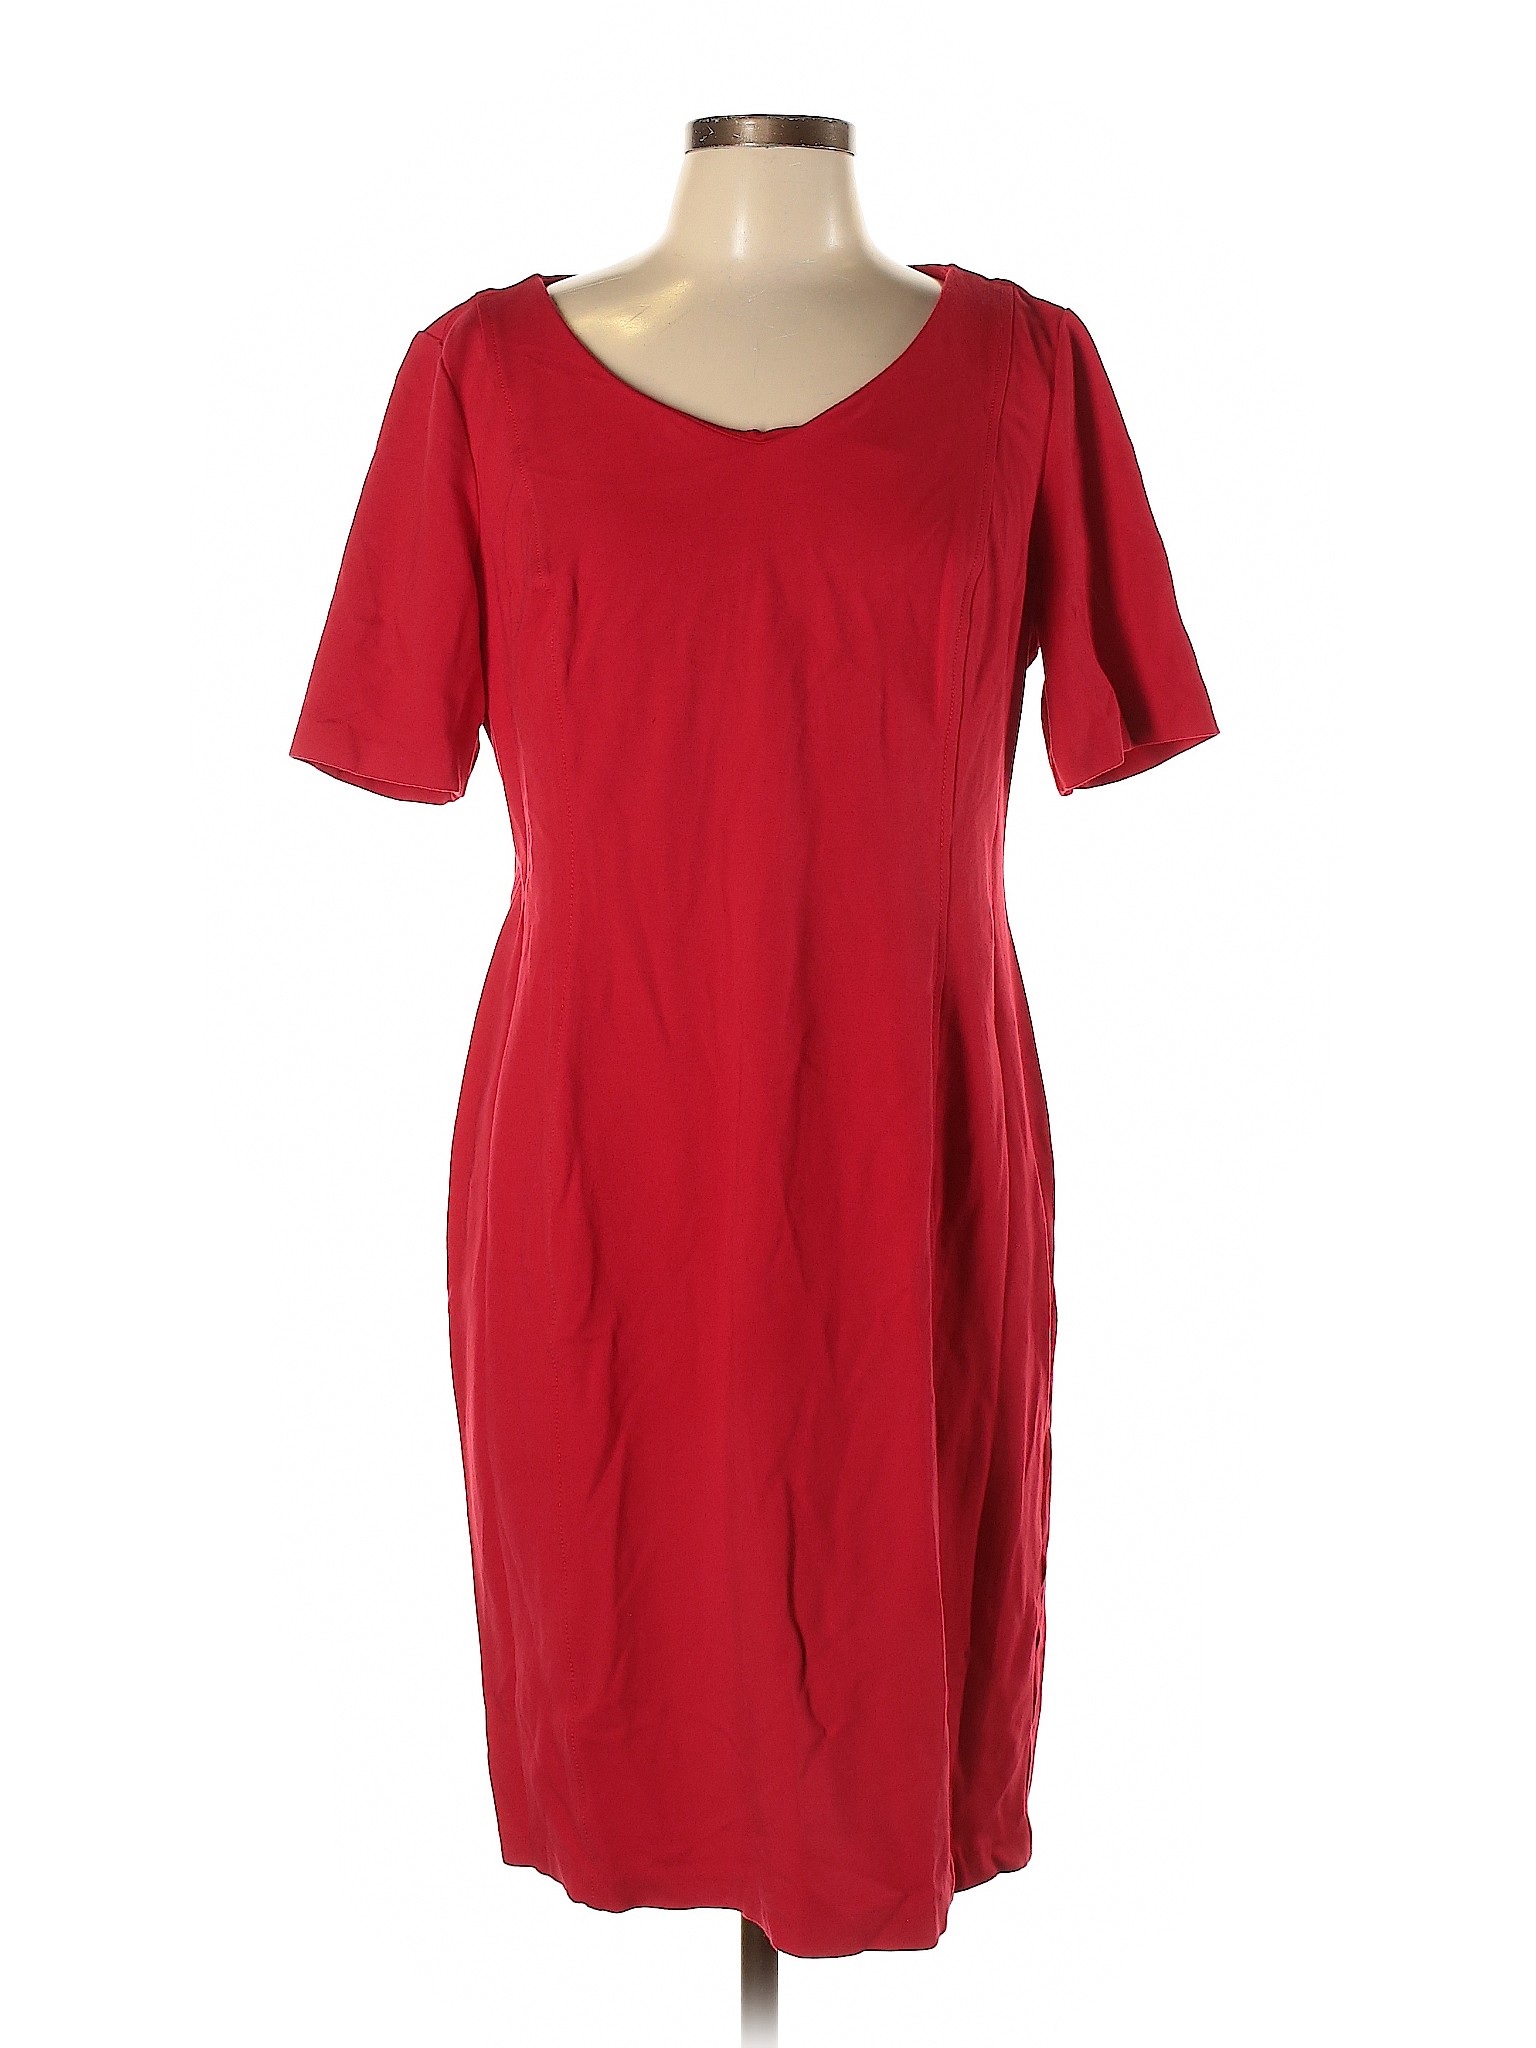 Talbots Women Red Casual Dress 12 | eBay